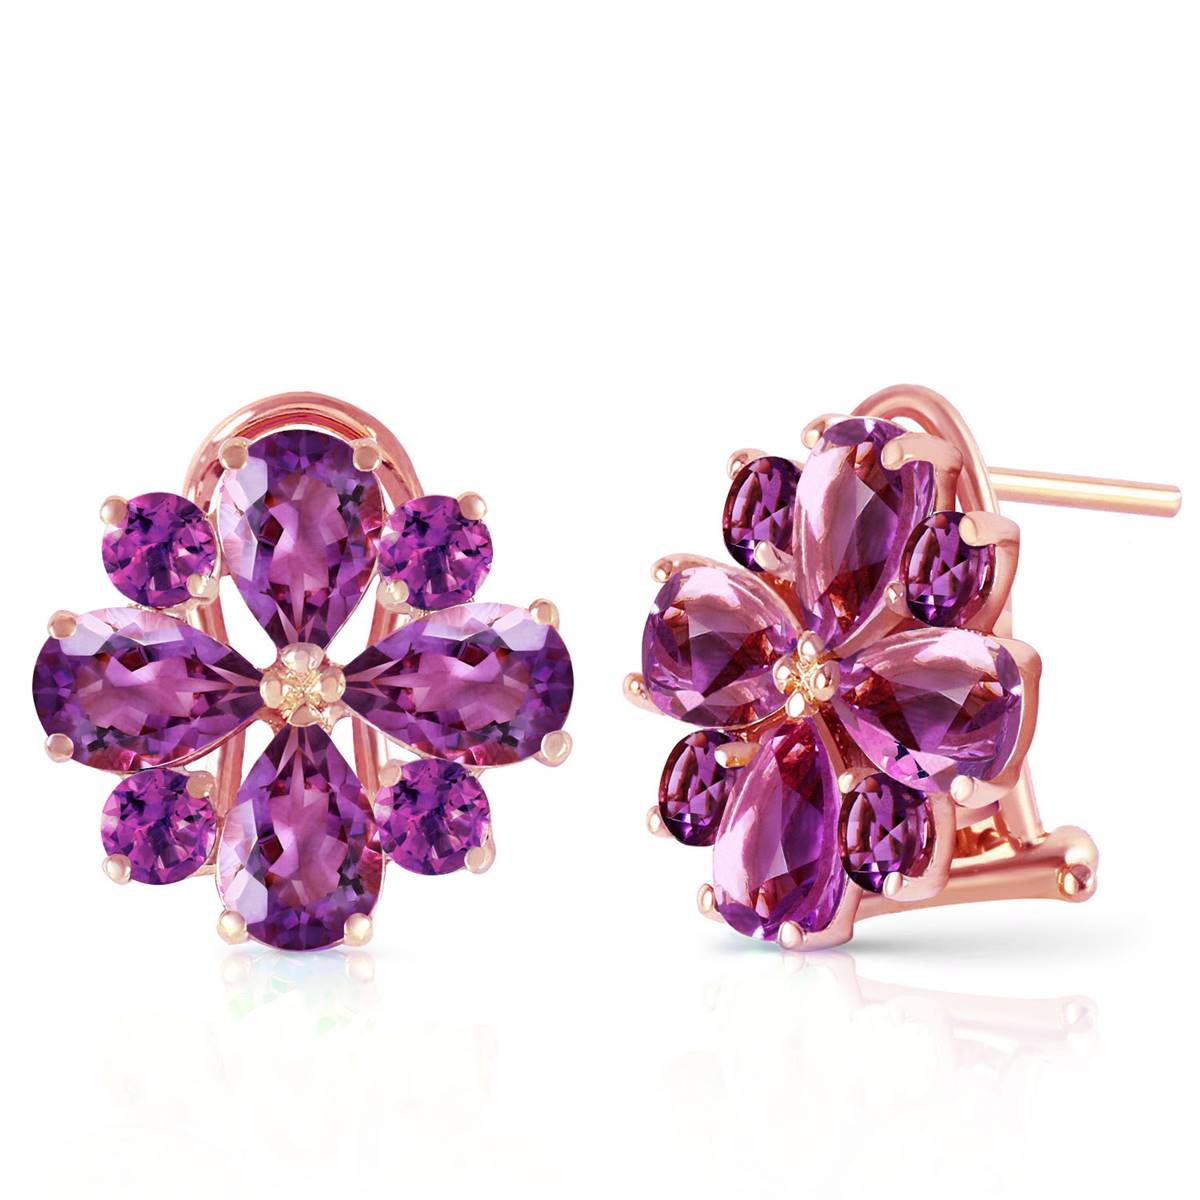 4.85 Carat 14K Solid Rose Gold Flower Amethyst Earrings